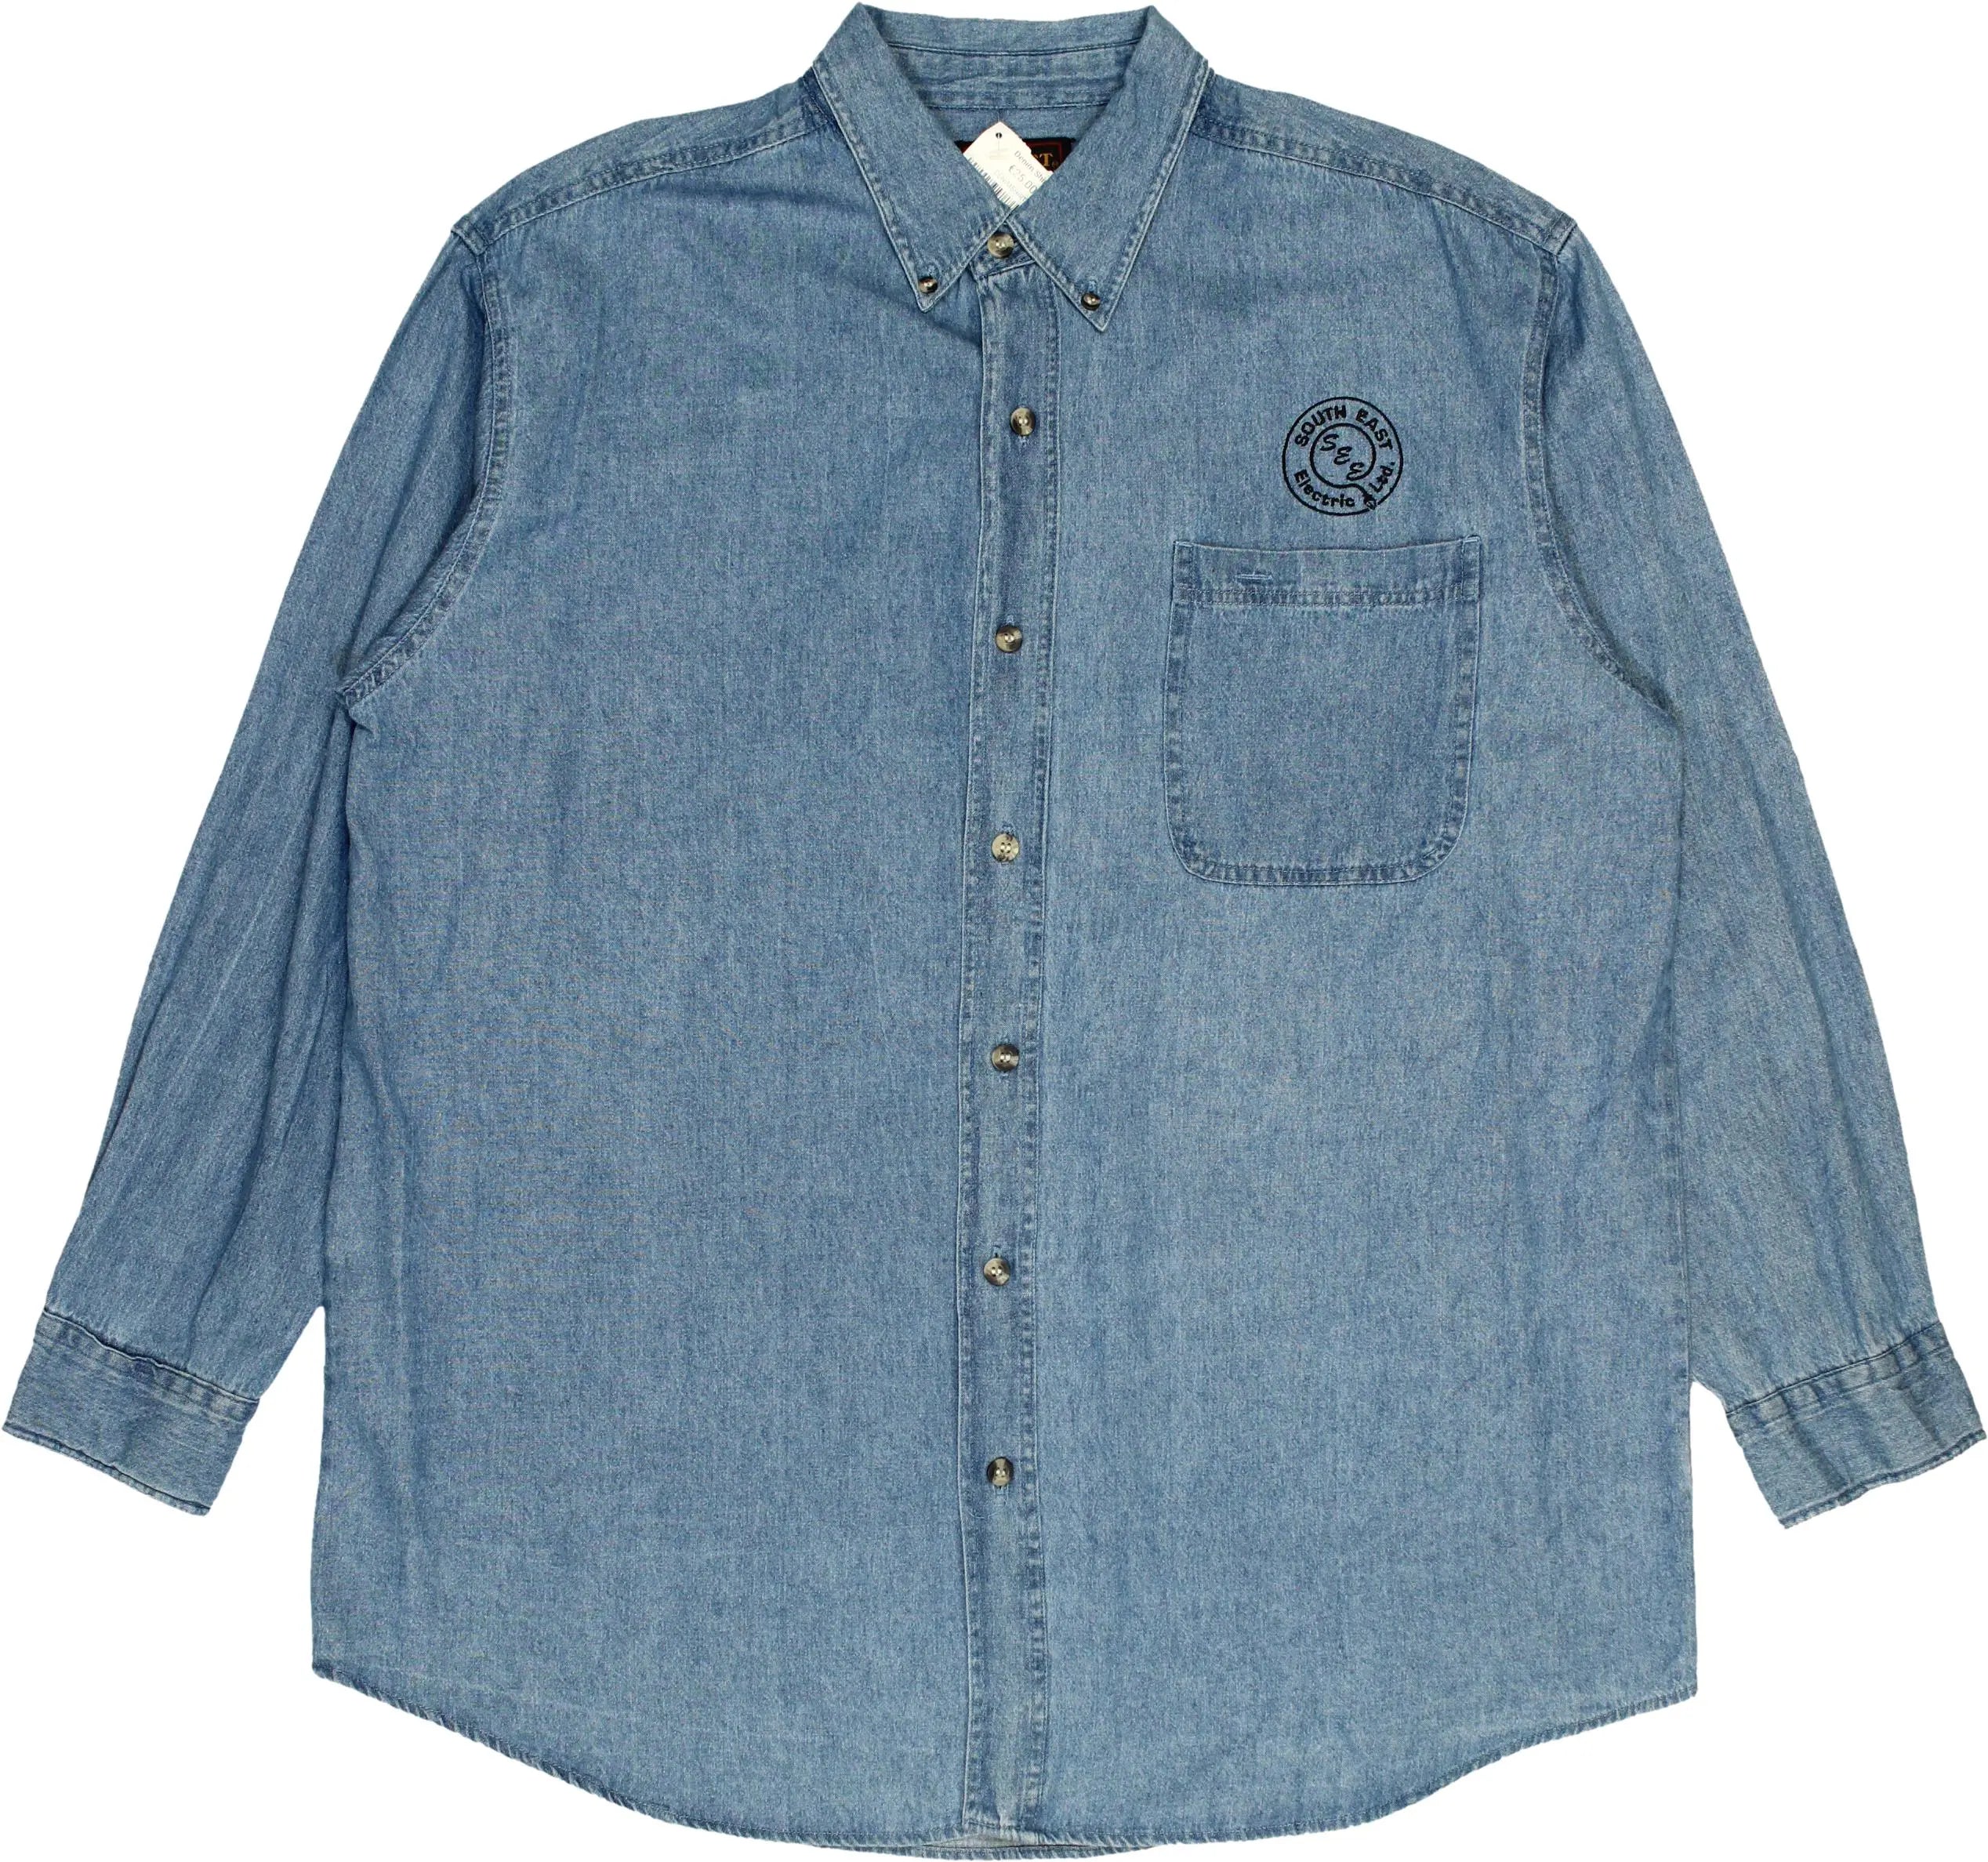 Kayjet - Denim Shirt- ThriftTale.com - Vintage and second handclothing